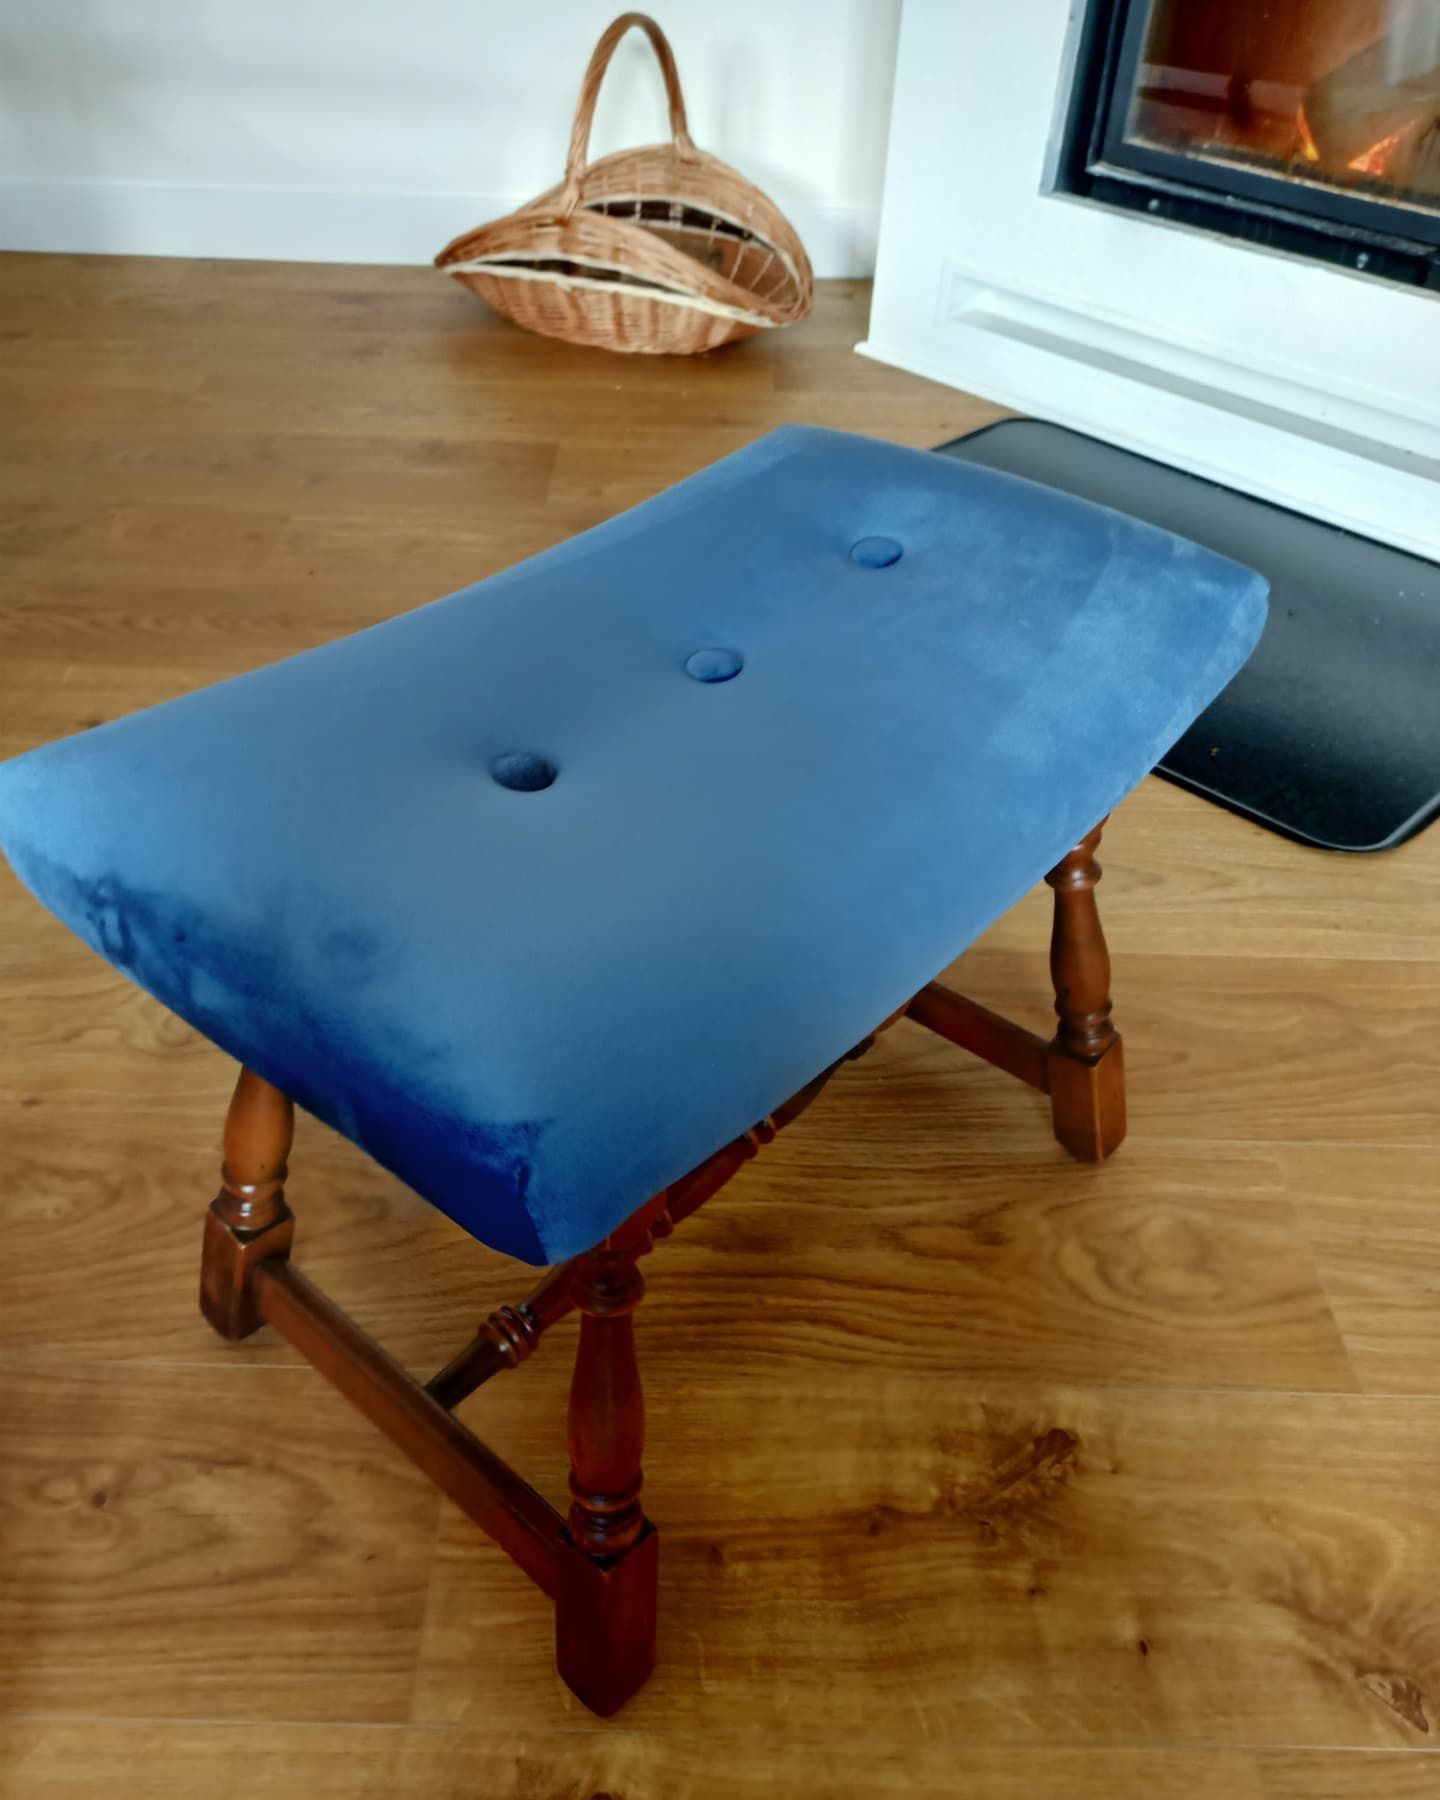 Stylowy tapicerowany podnóżek pufa taboret stołek fotel uszak vintage